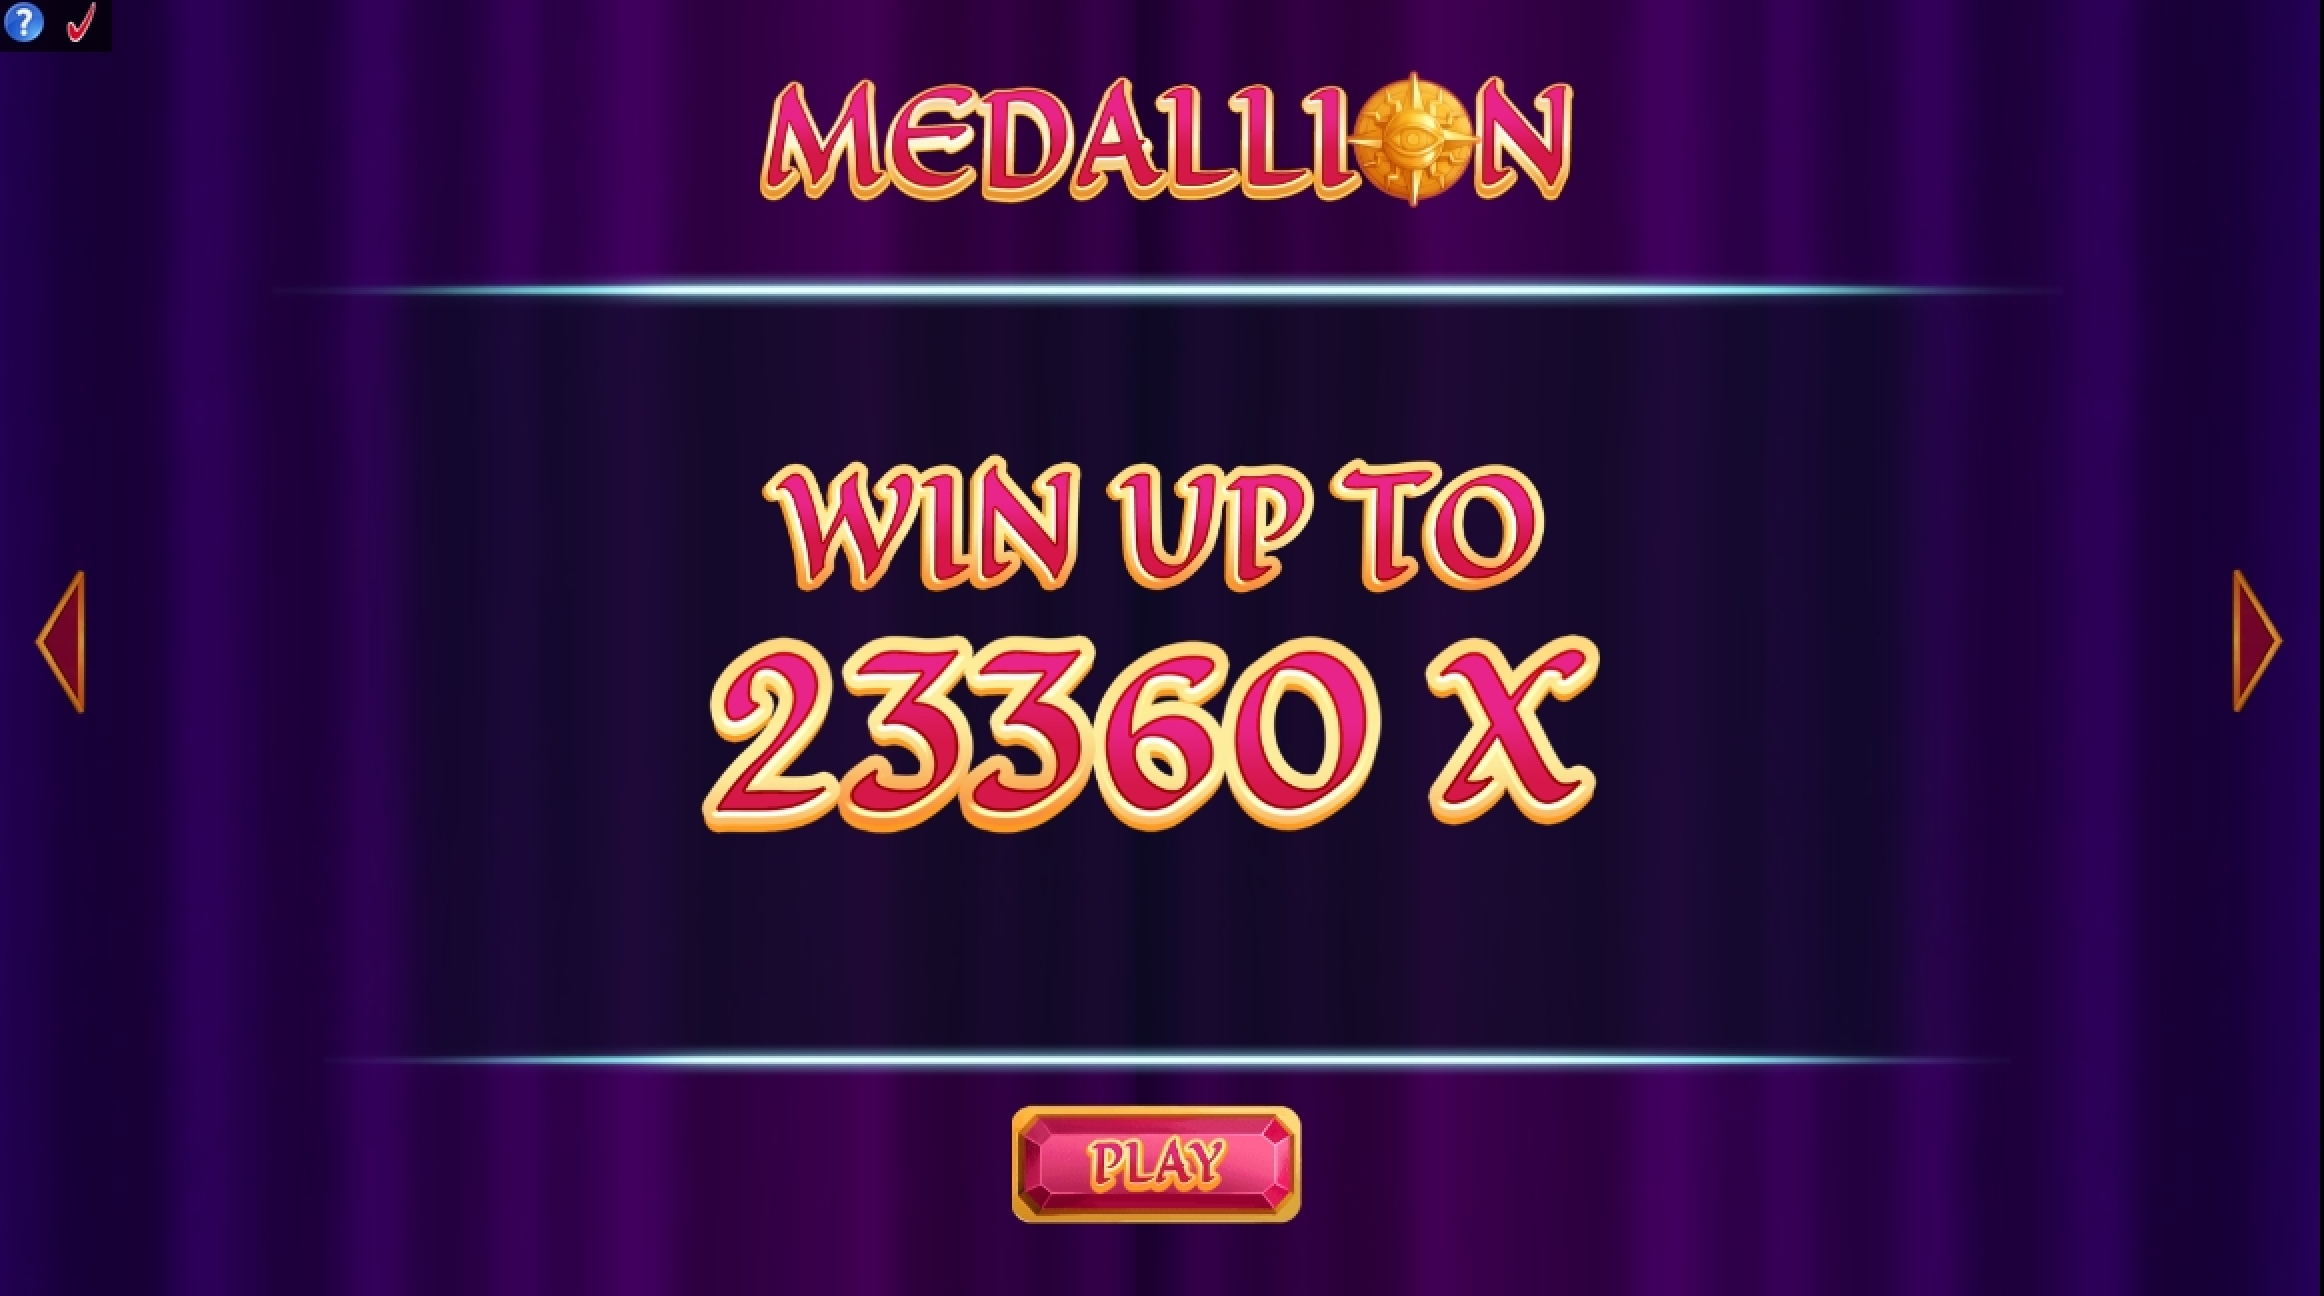 Play Medallion Megaways Free Casino Slot Game by Fantasma Games